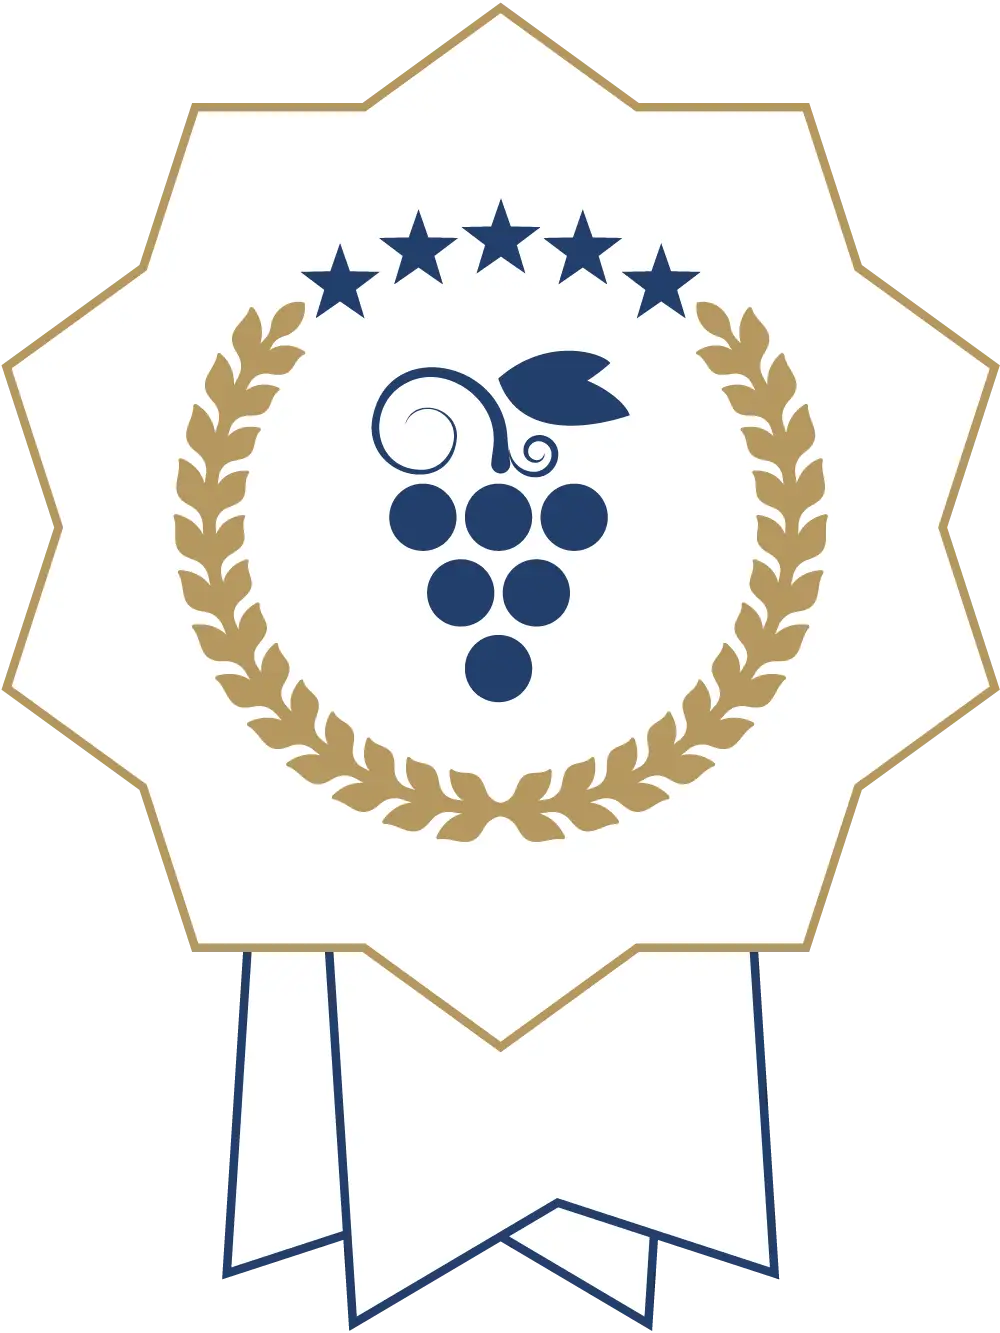 The Harris Estate & Vineyards award winning wine grapes